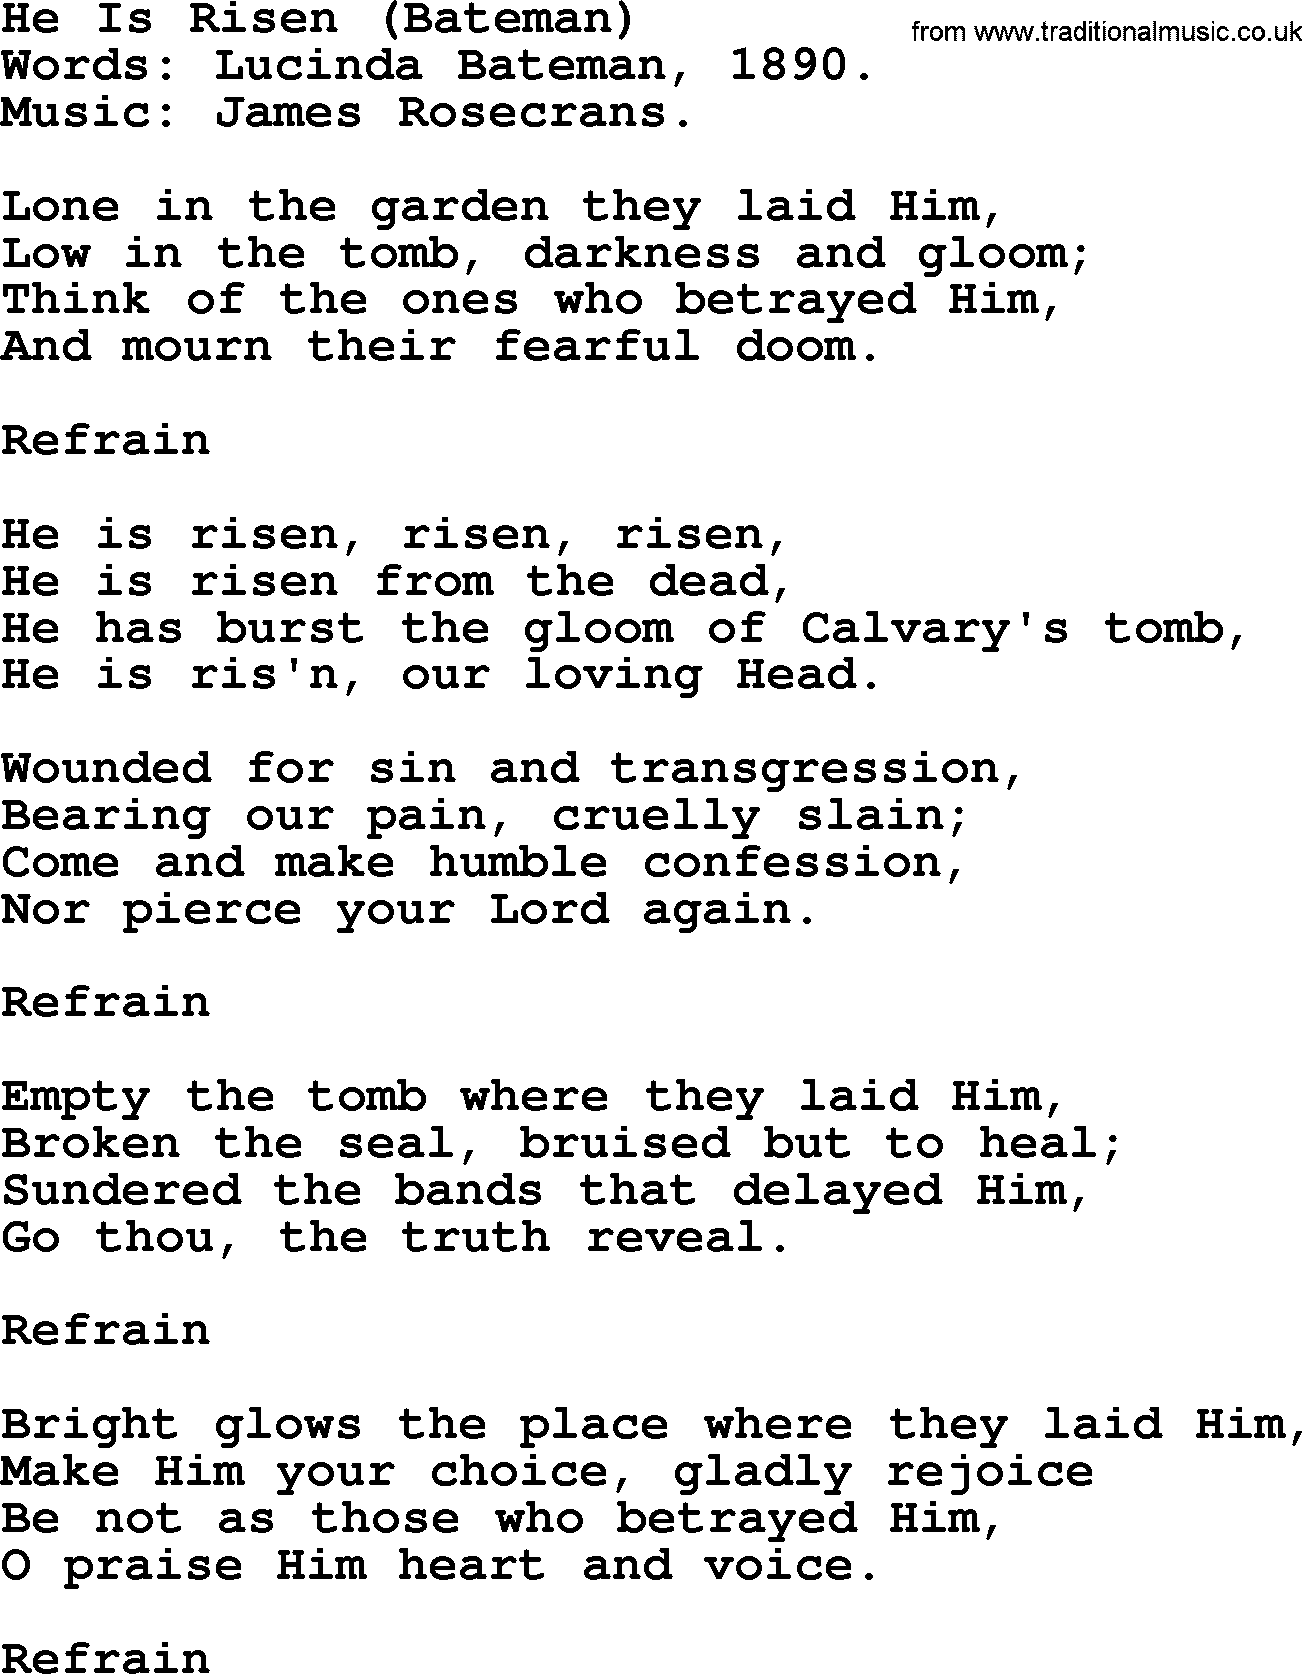 Easter Hymns, Hymn: He Is Risen (bateman), lyrics with PDF